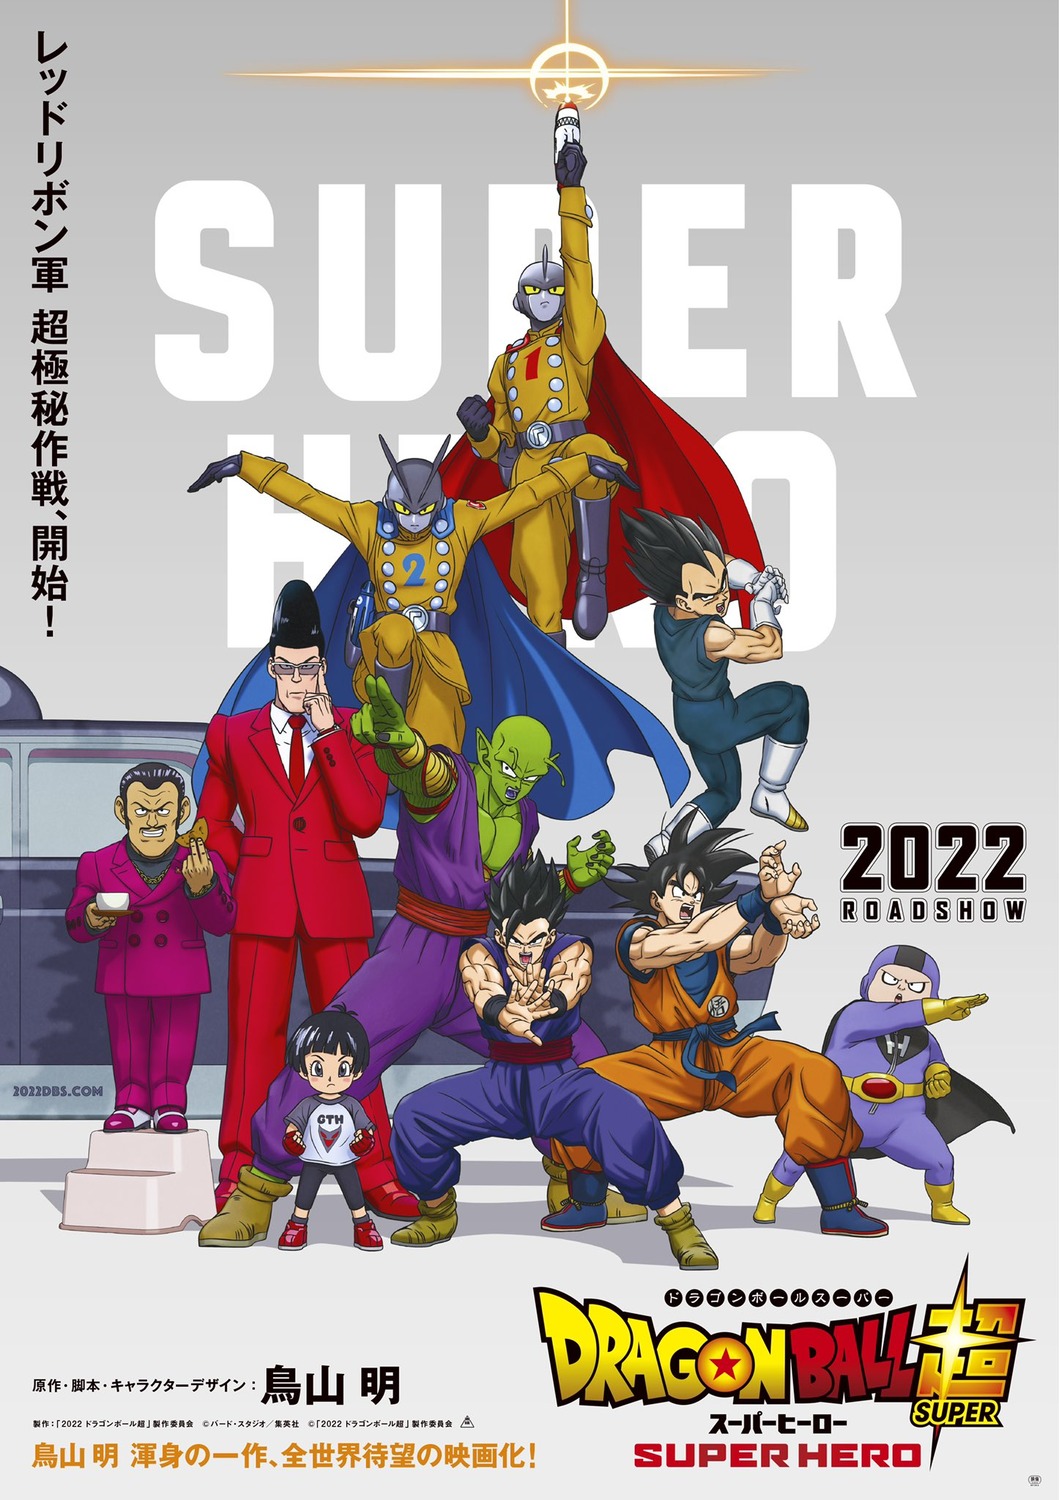 Extra Large Movie Poster Image for Doragon boru supa supa hiro (#1 of 11)